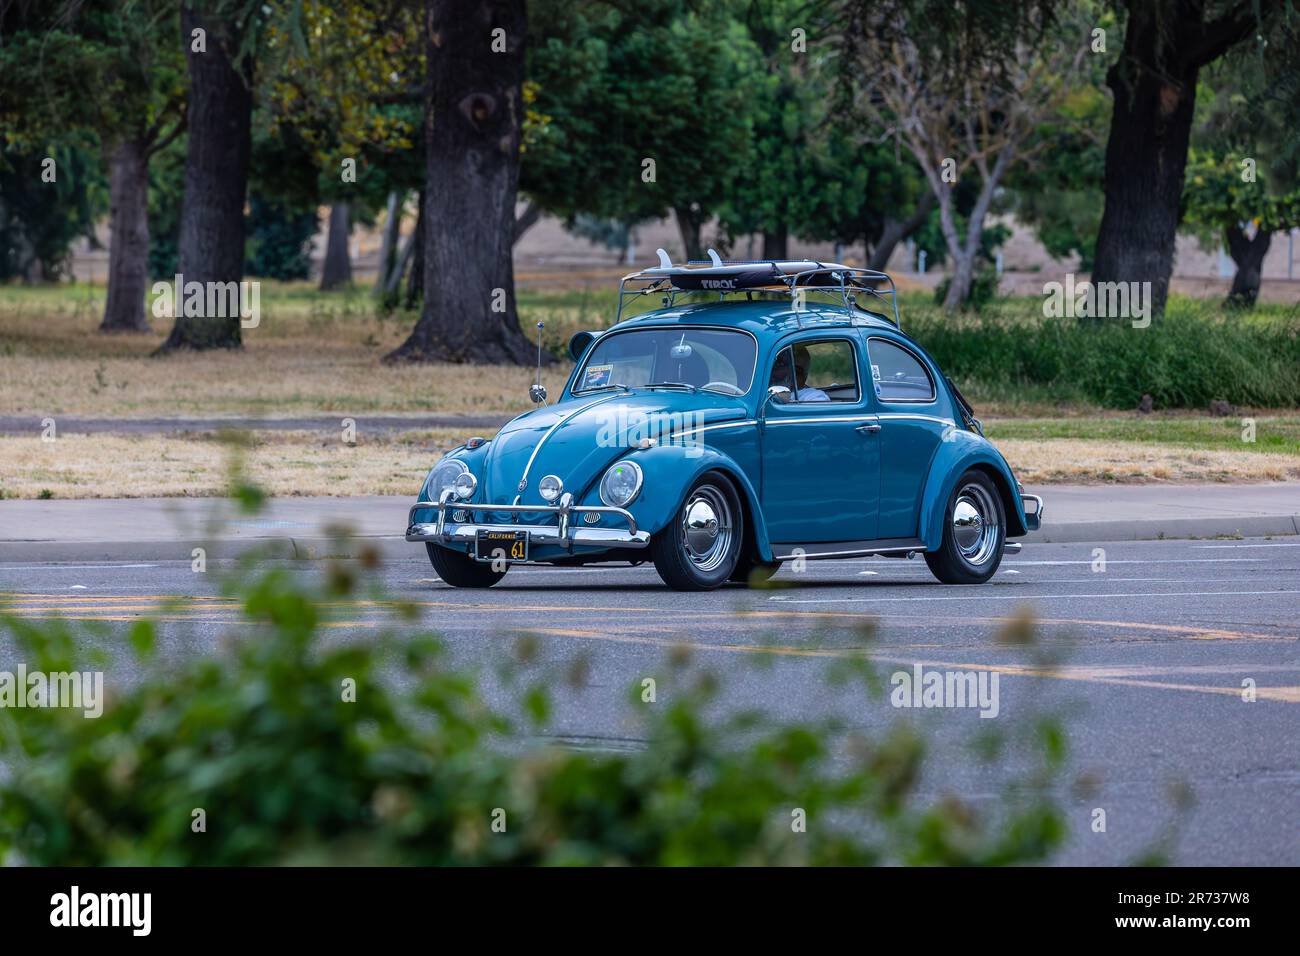 A 1960's era Volkswagen Beetle at the North Modesto Kiwanis American Graffiti Car Show & Festival Stock Photo